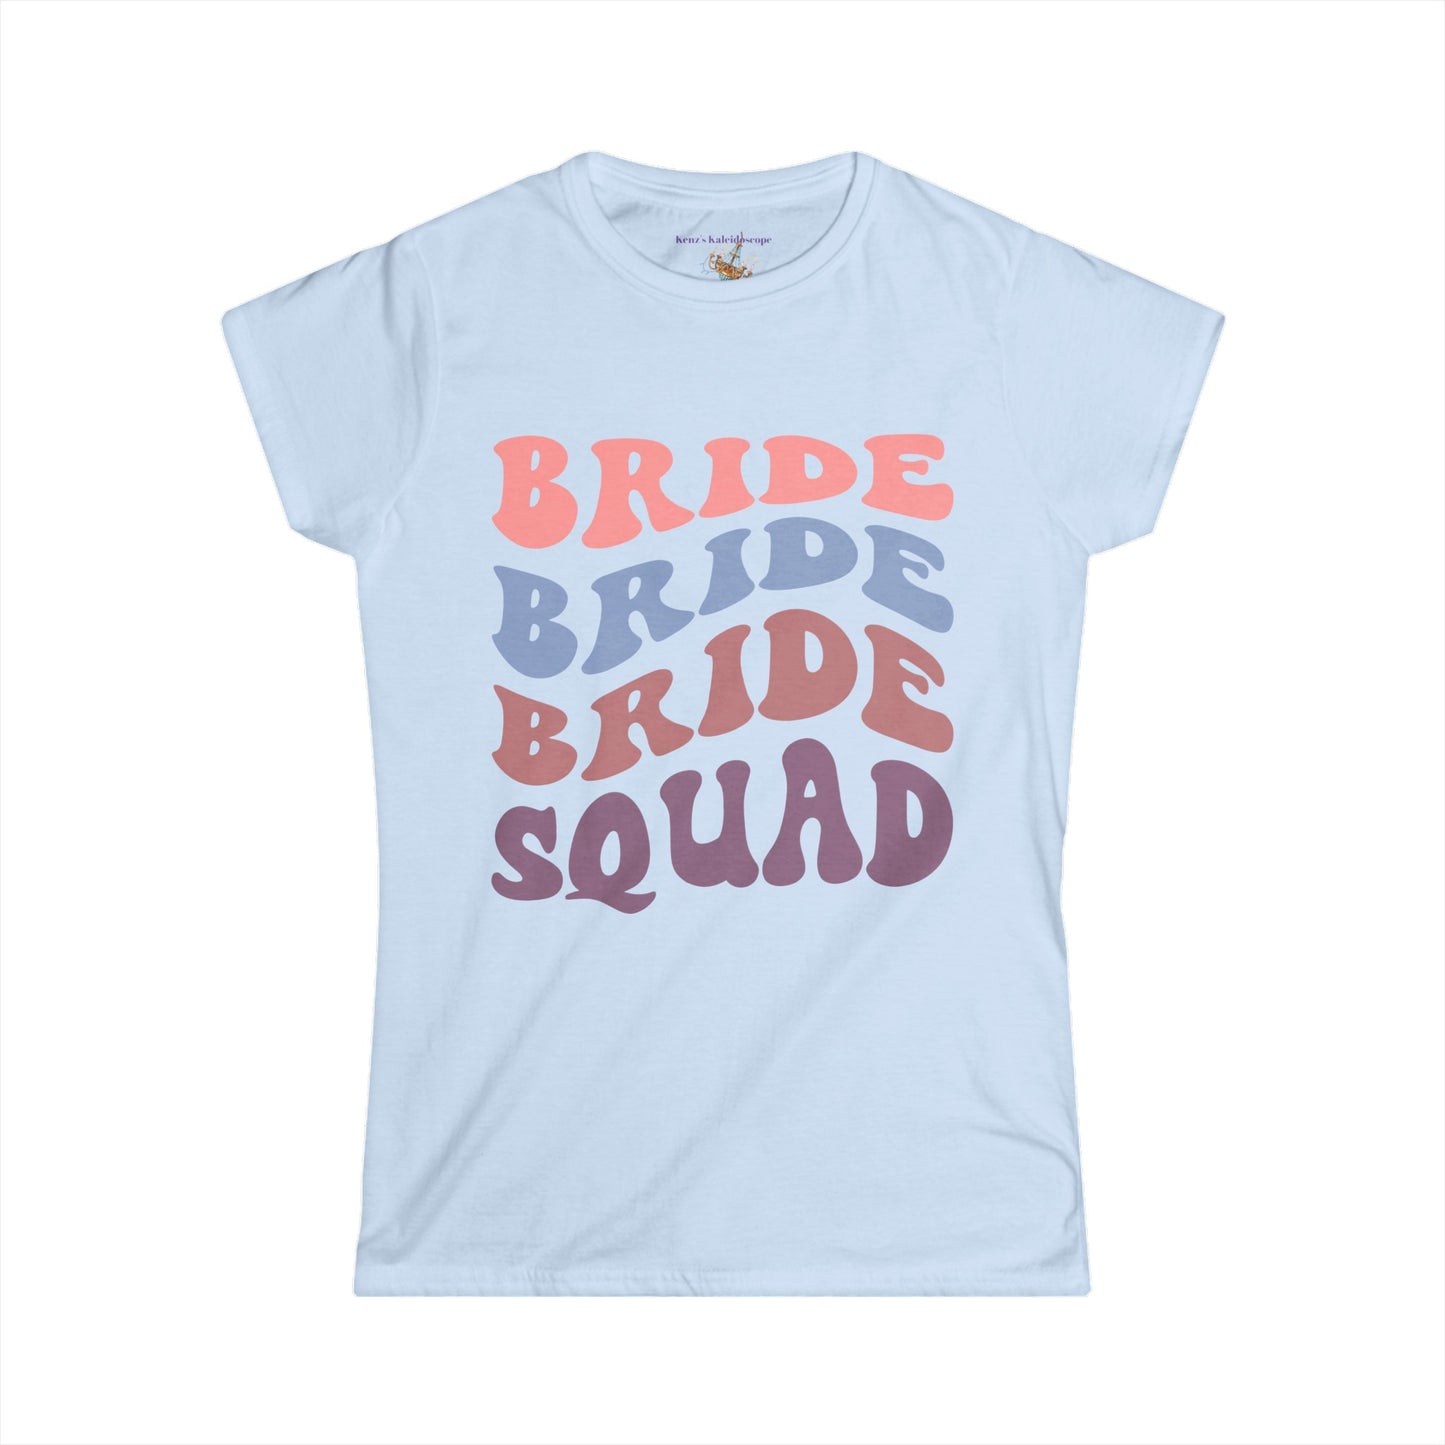 Bride Squad Retro Repeat, S-2XL, Women's Softstyle Tee